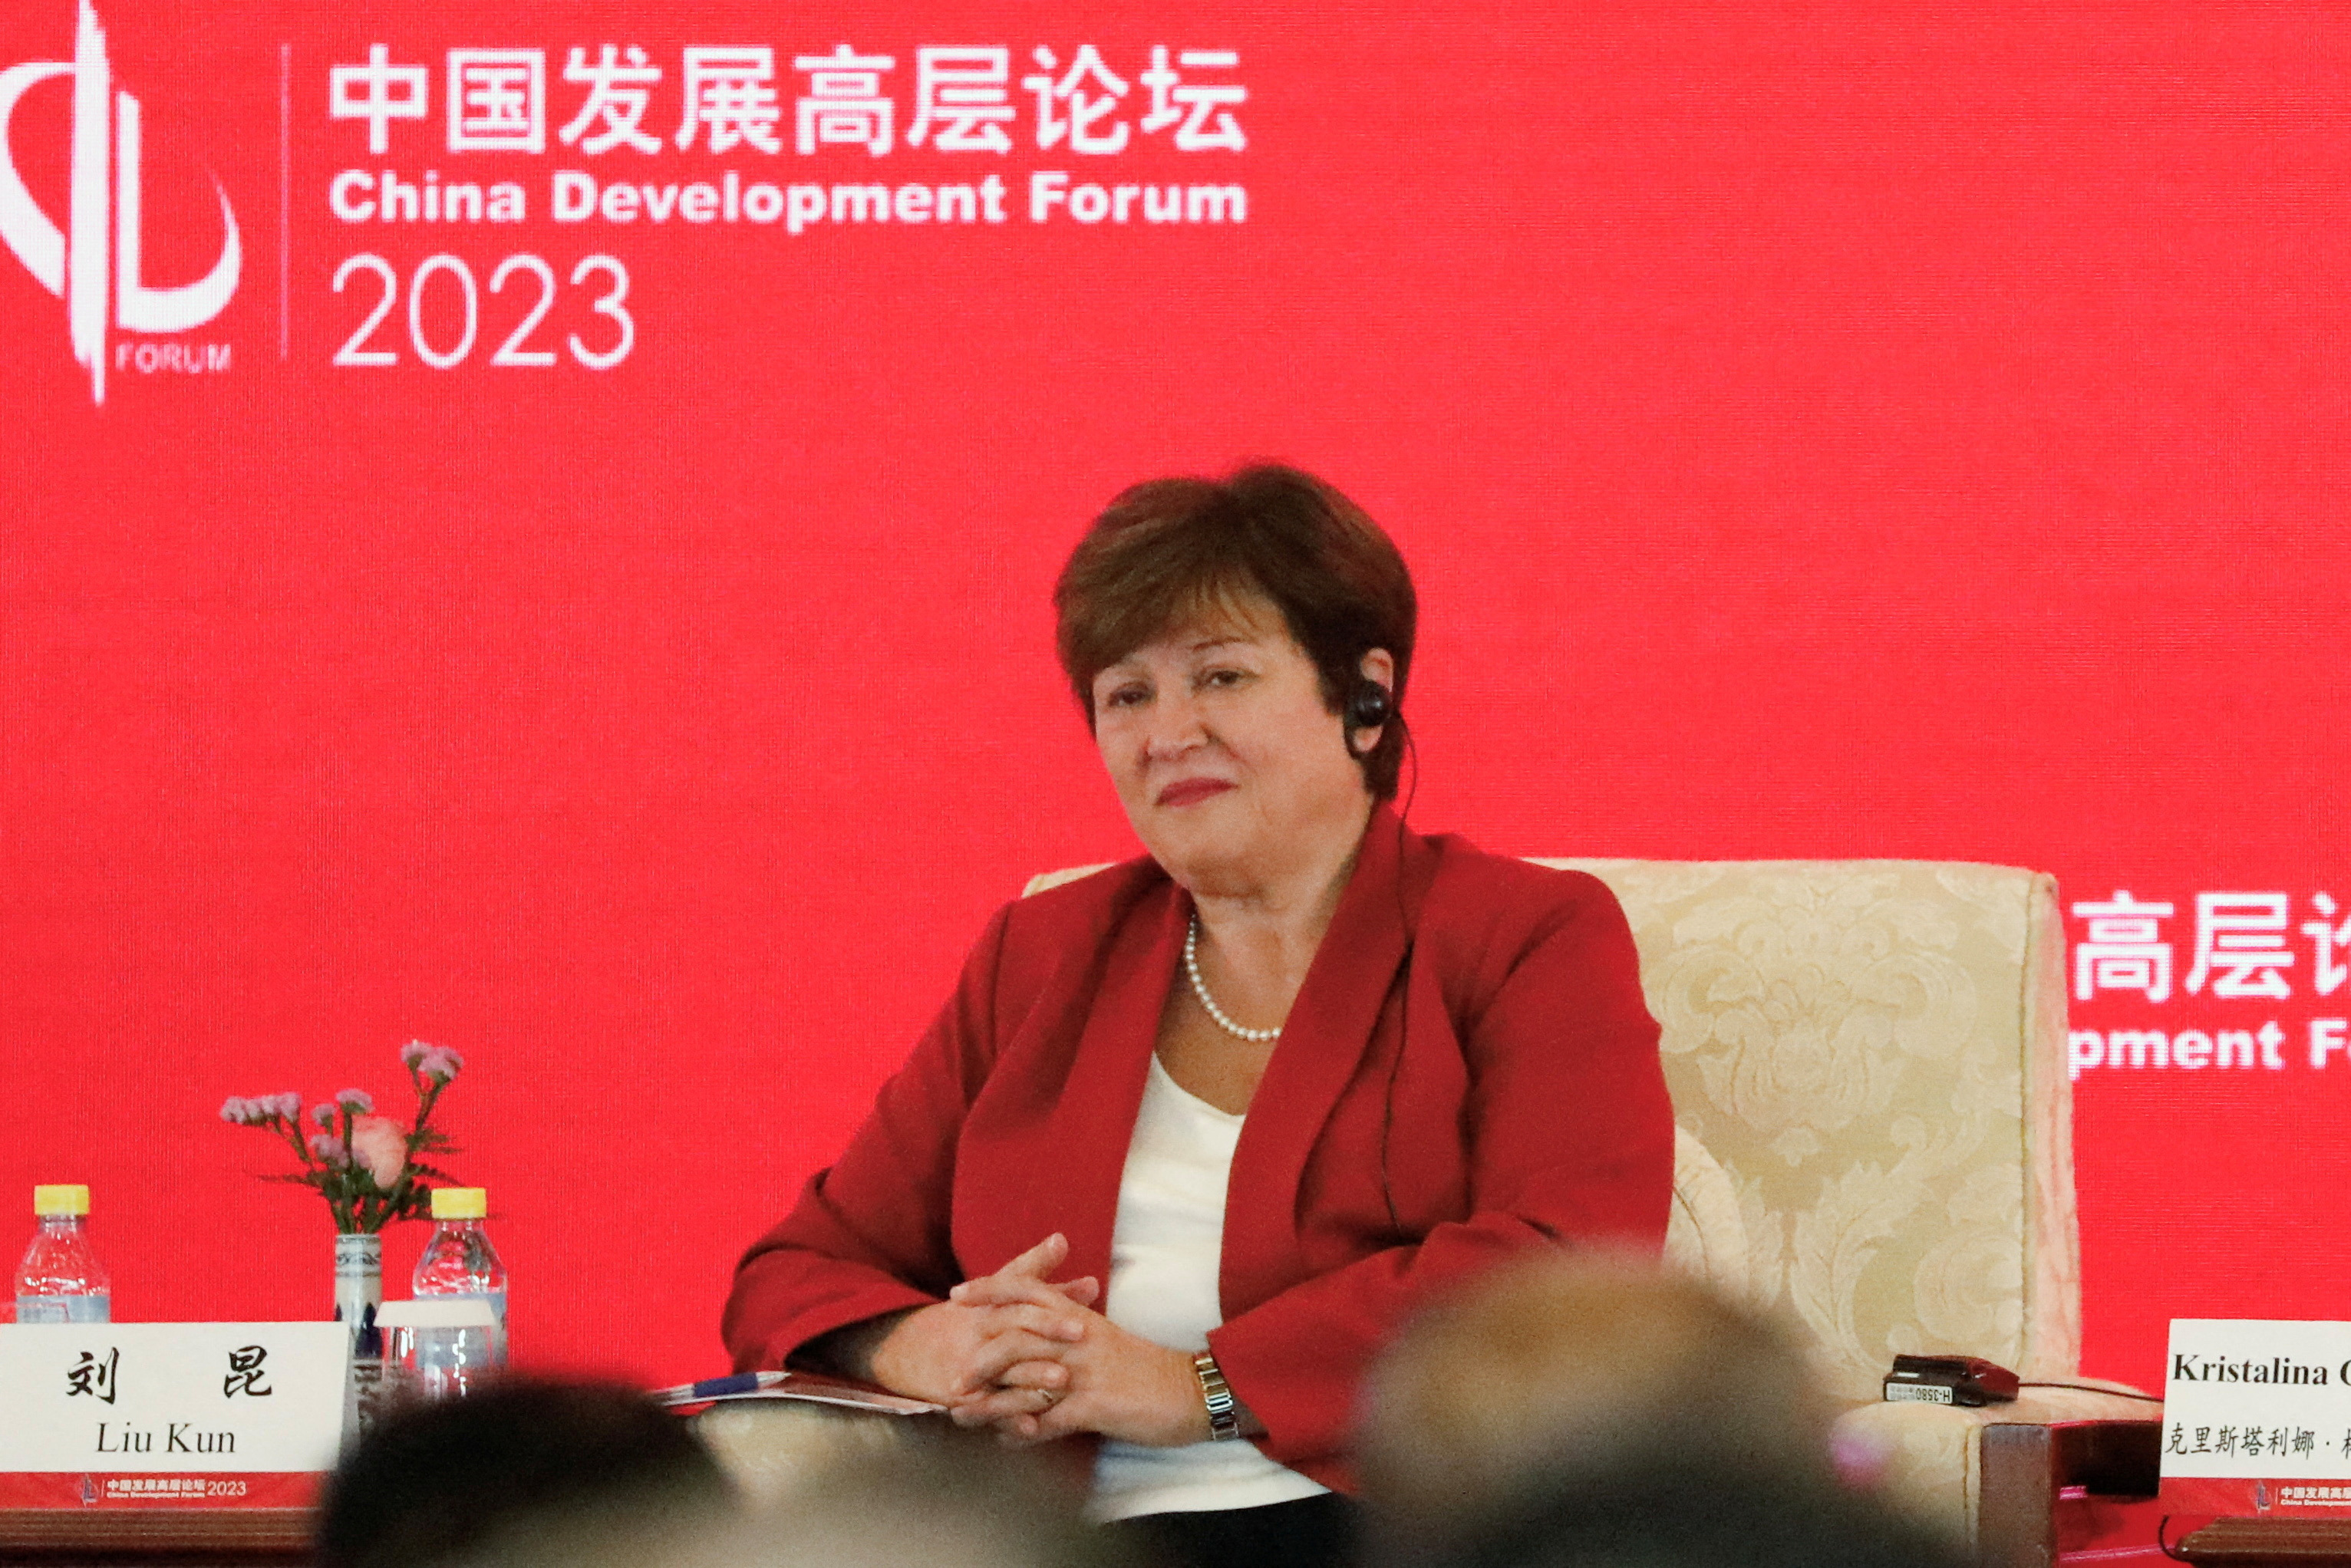 International Monetary Fund (IMF) Managing Director Kristalina Georgieva attends the China Development Forum 2023